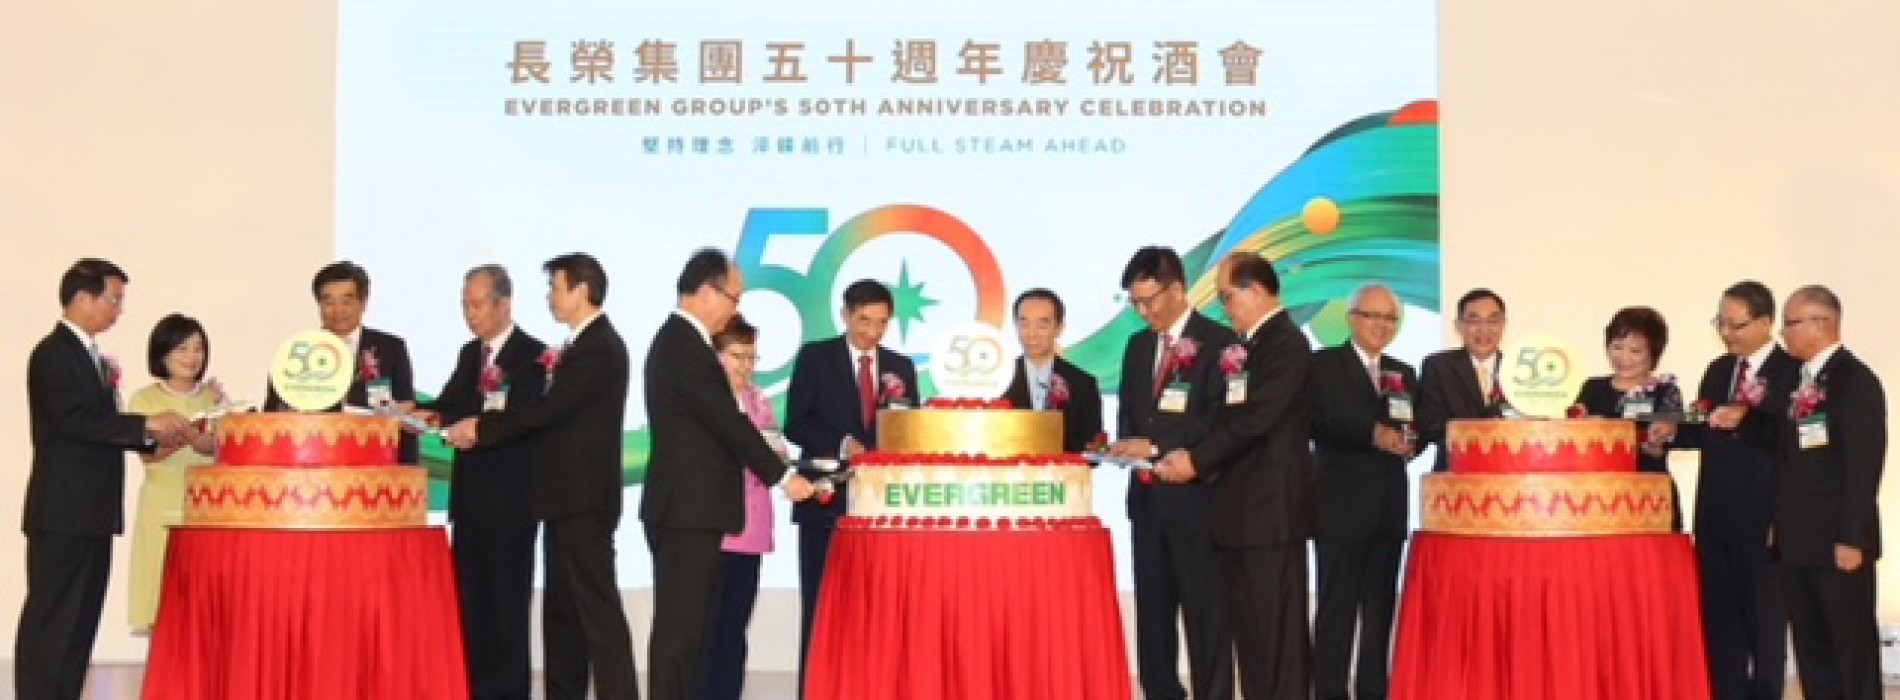 Evergreen Group celebrates 50th Anniversary